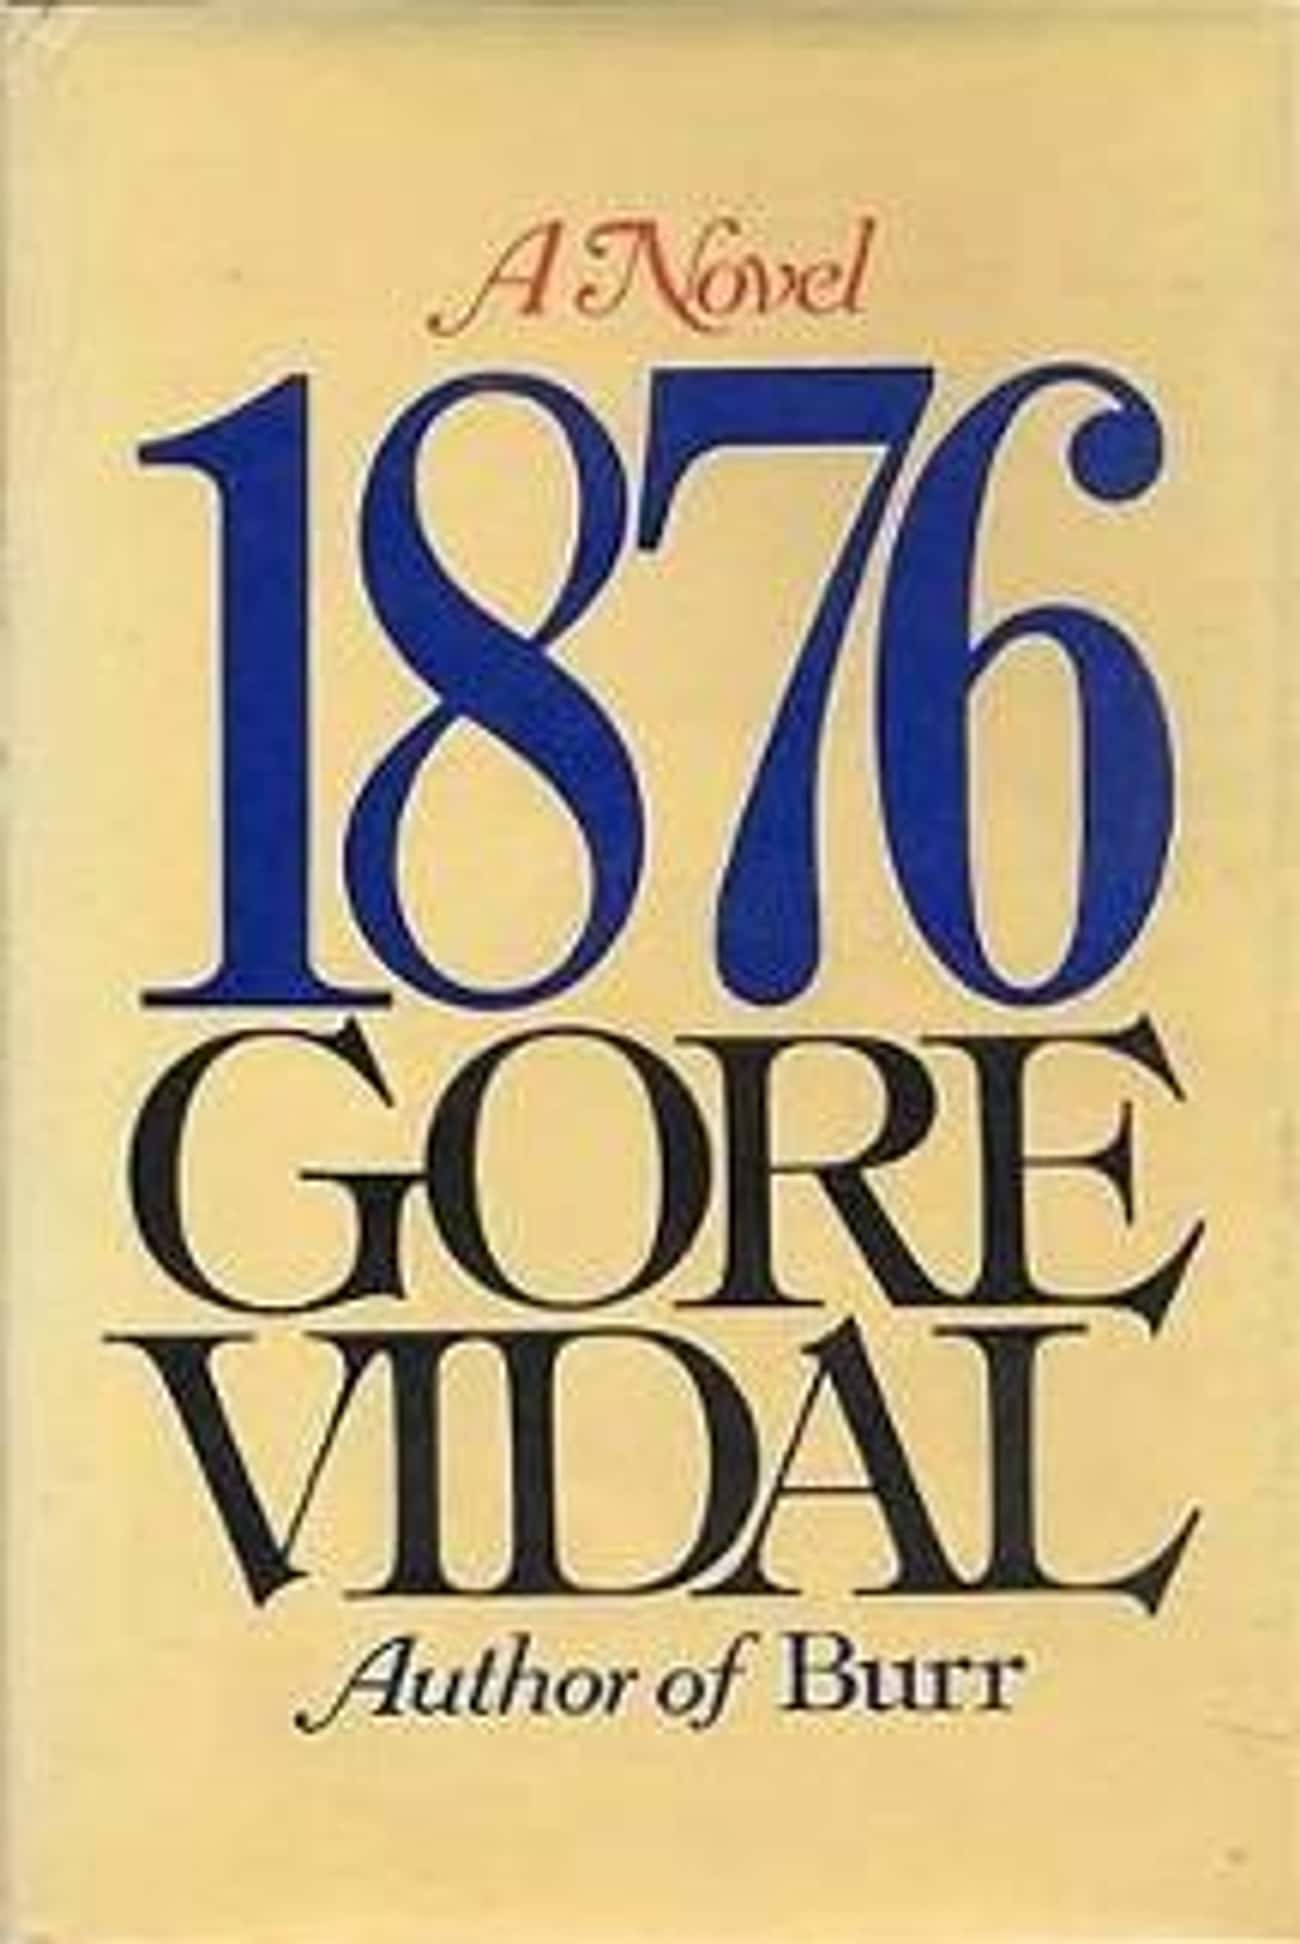 Книга видал. Гор видал. Gore Vidal’s book.